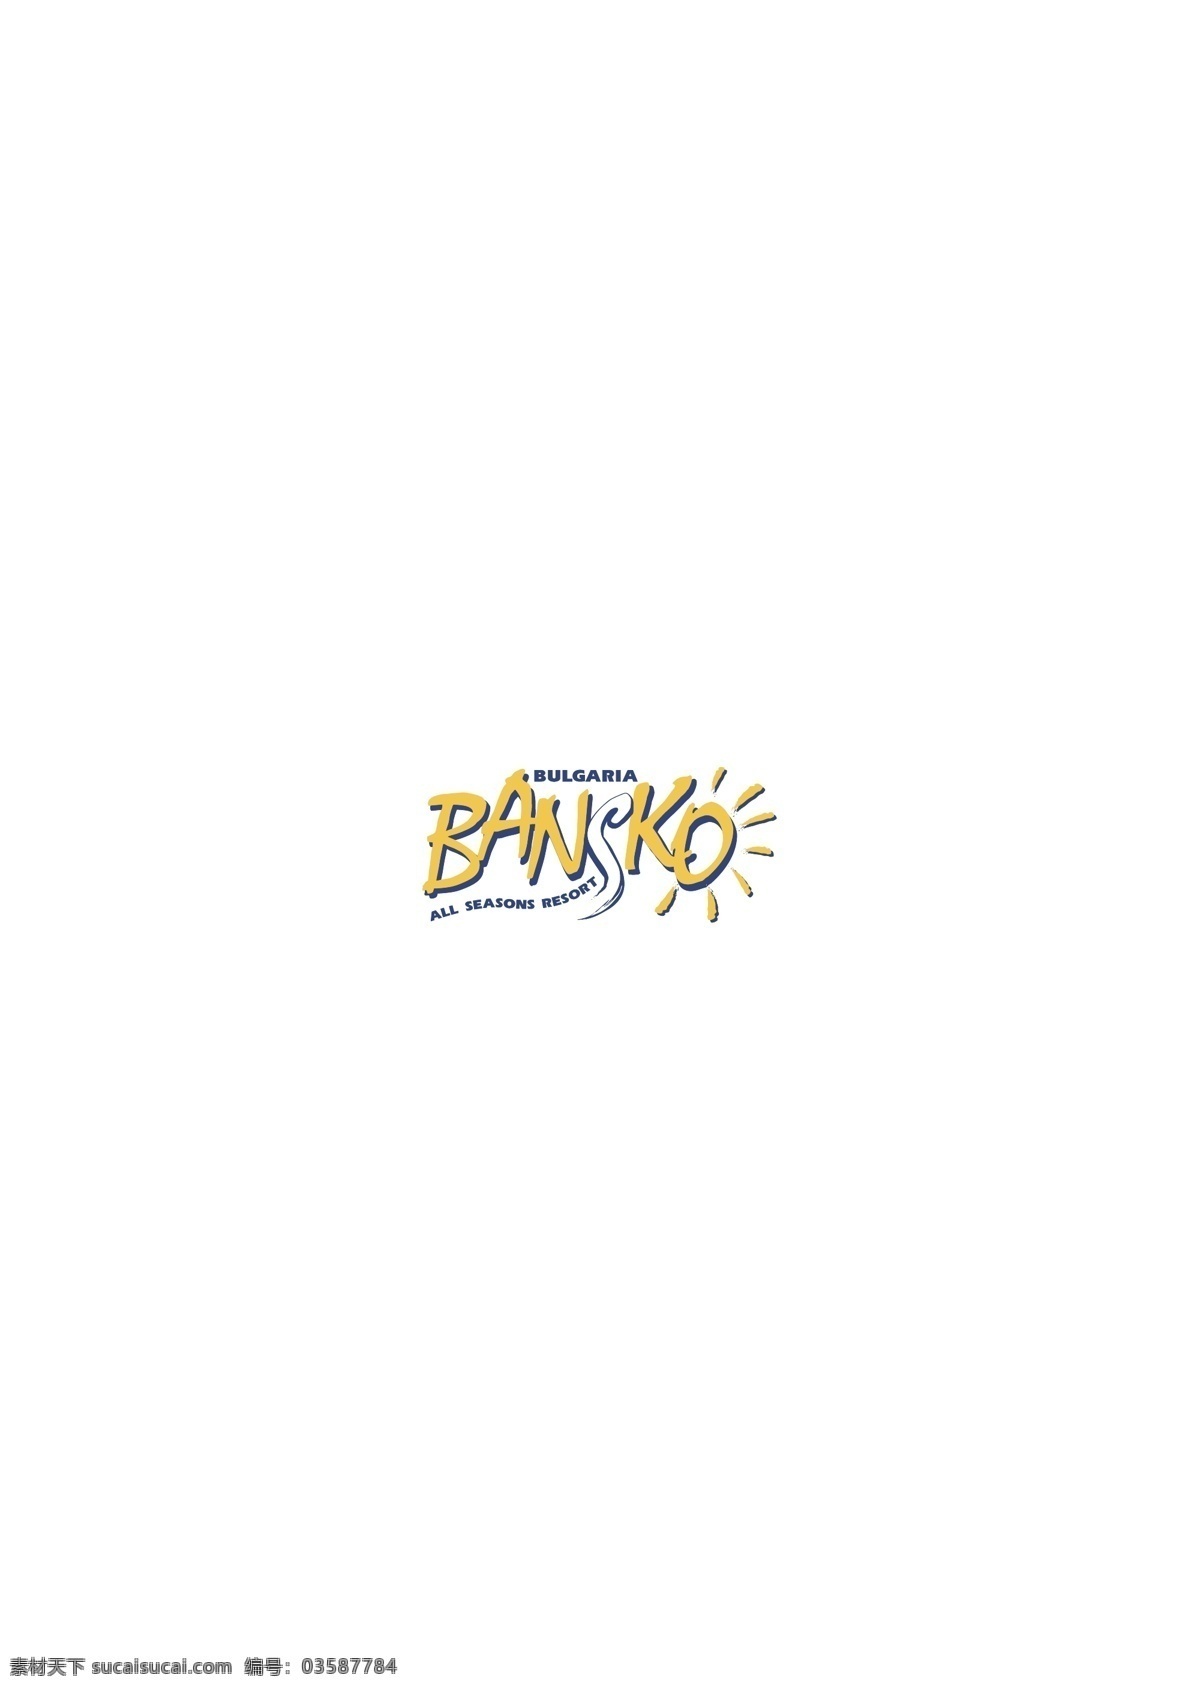 bansko logo大全 logo 设计欣赏 商业矢量 矢量下载 旅行社 标志 标志设计 欣赏 网页矢量 矢量图 其他矢量图